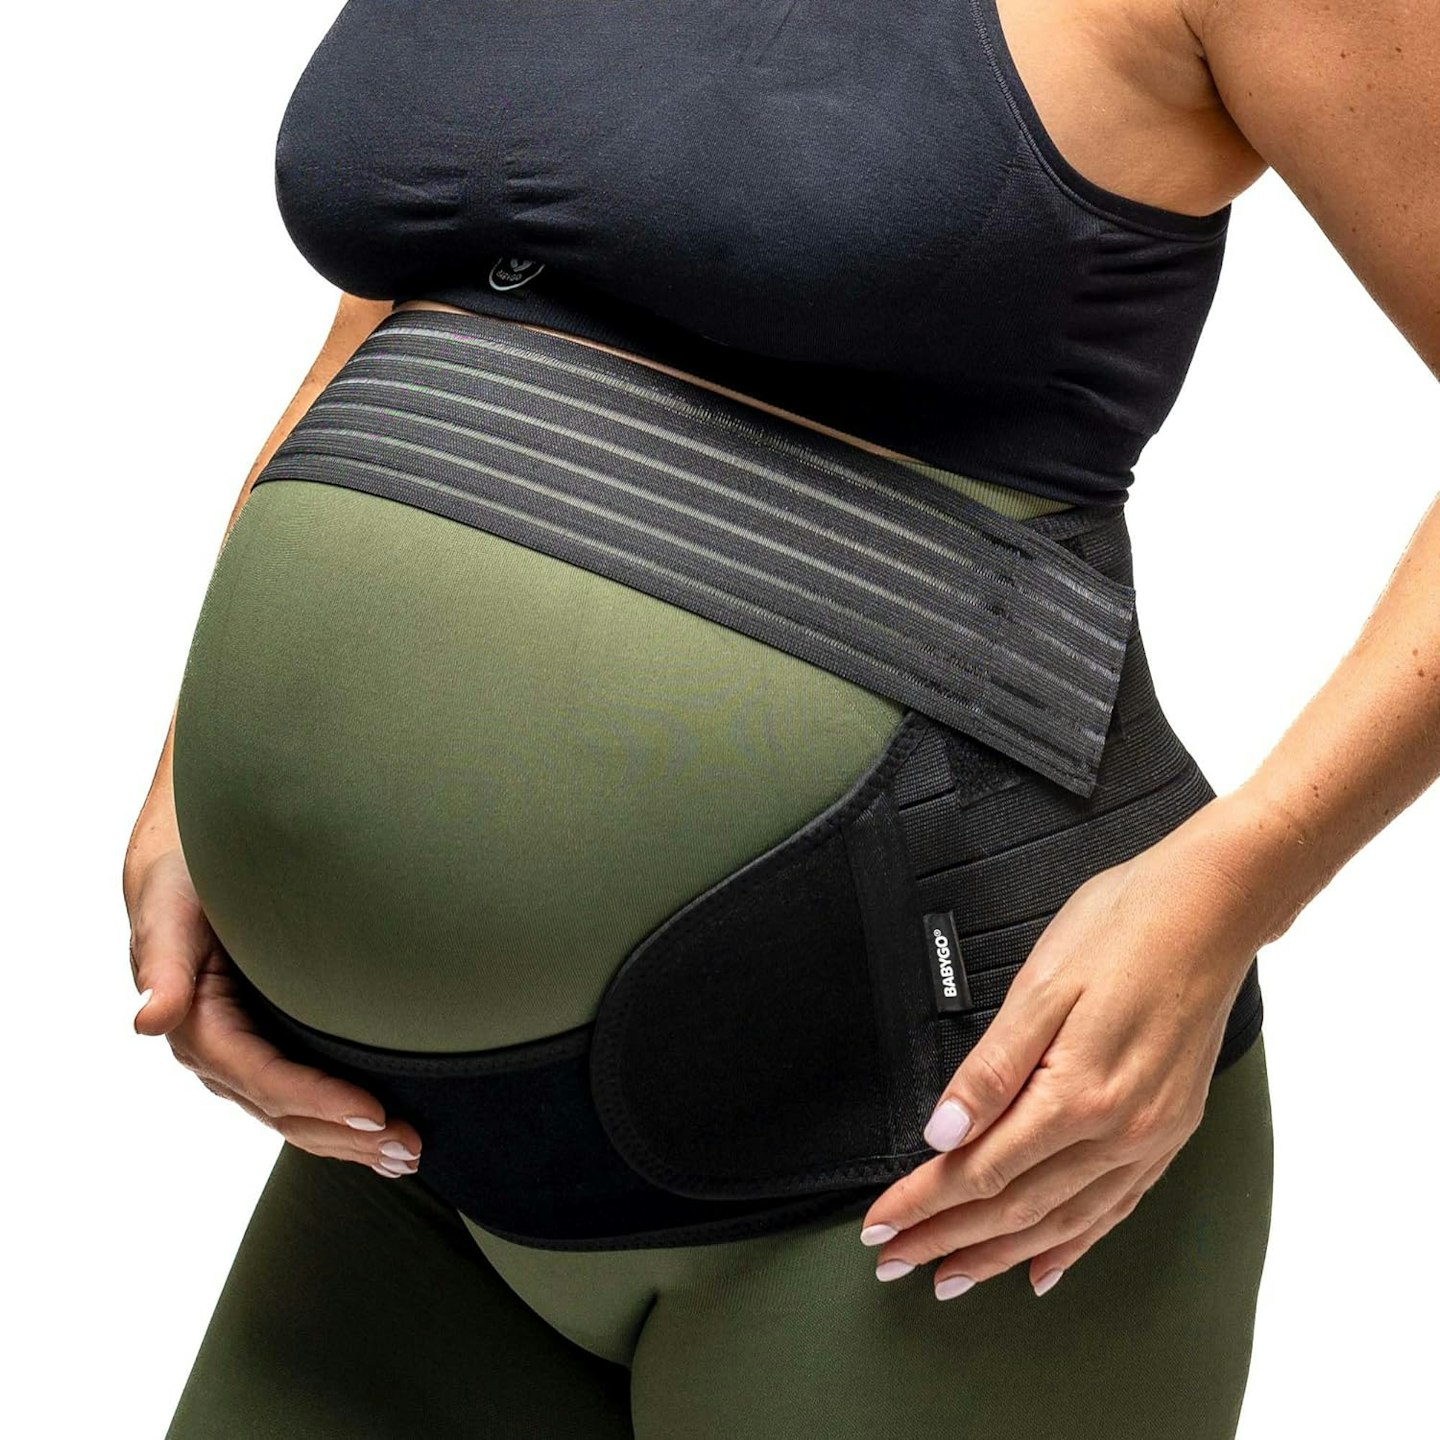 BABYGO 4 in 1 pregnancy support belt